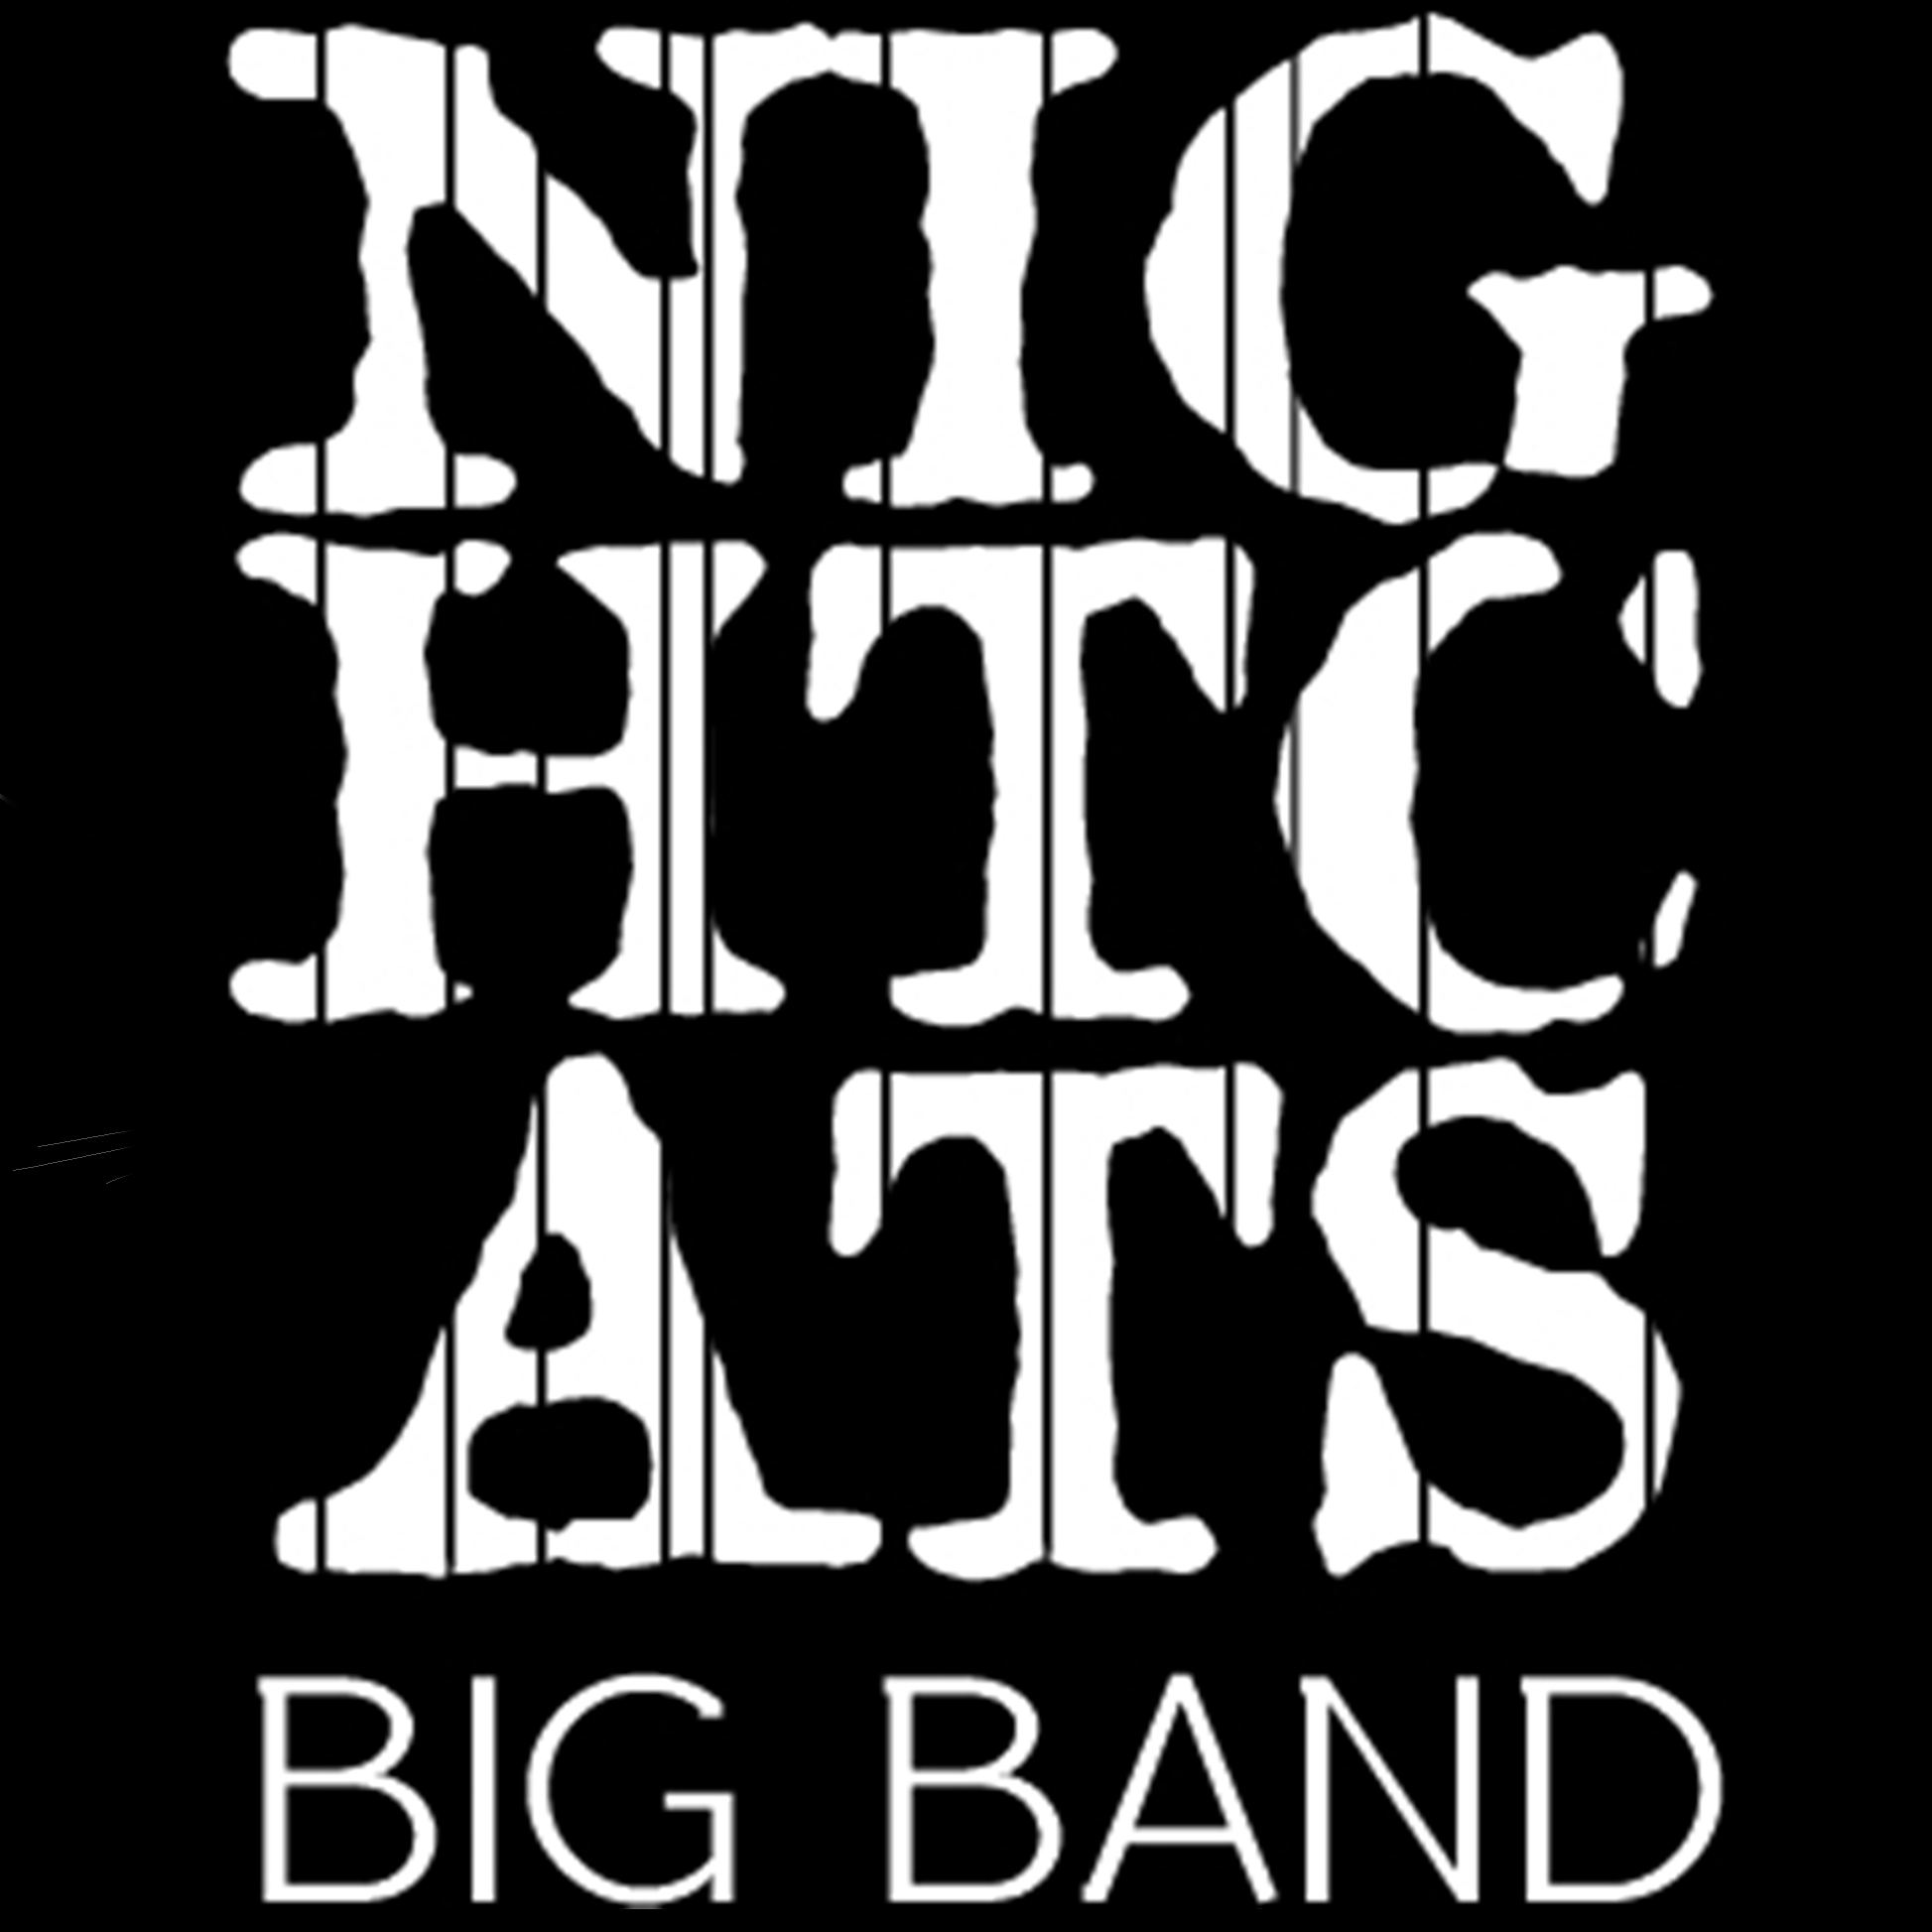 NightCats BigBand